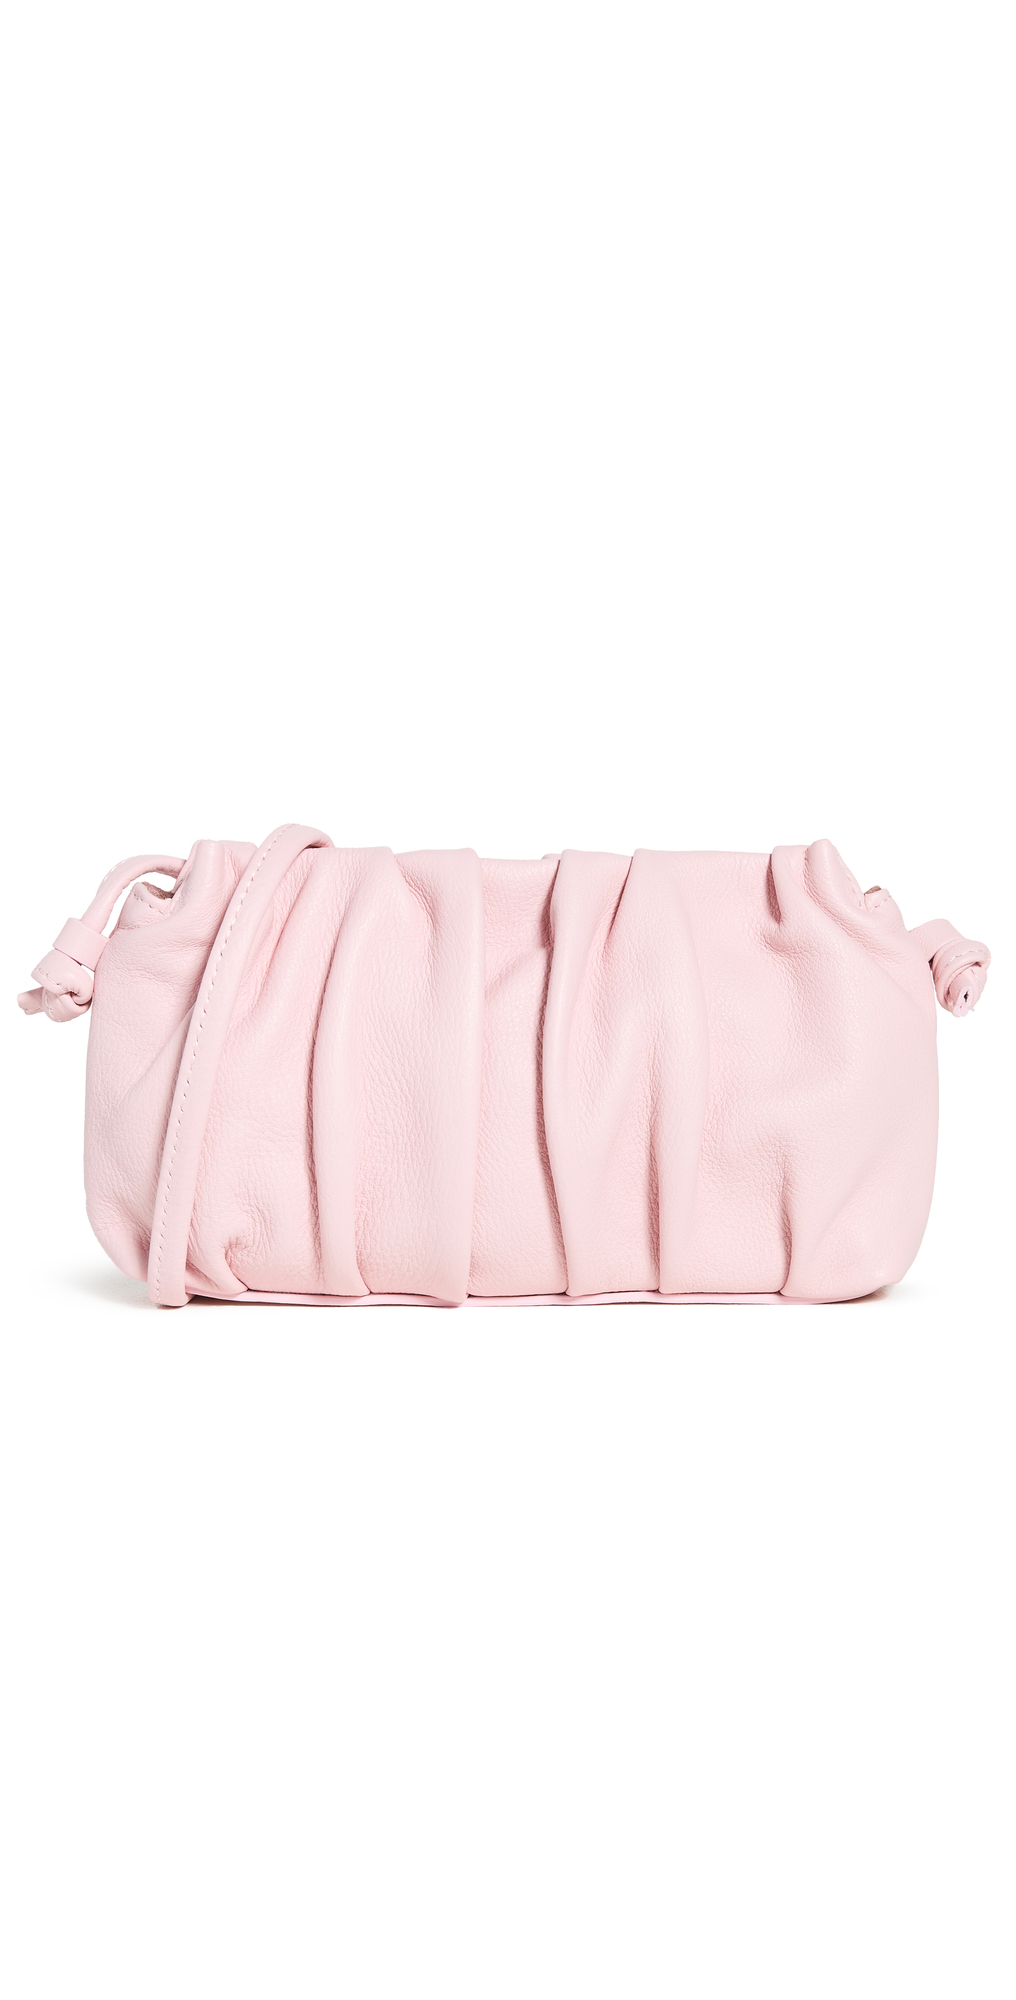 Elleme Mini Vague Bag in pink